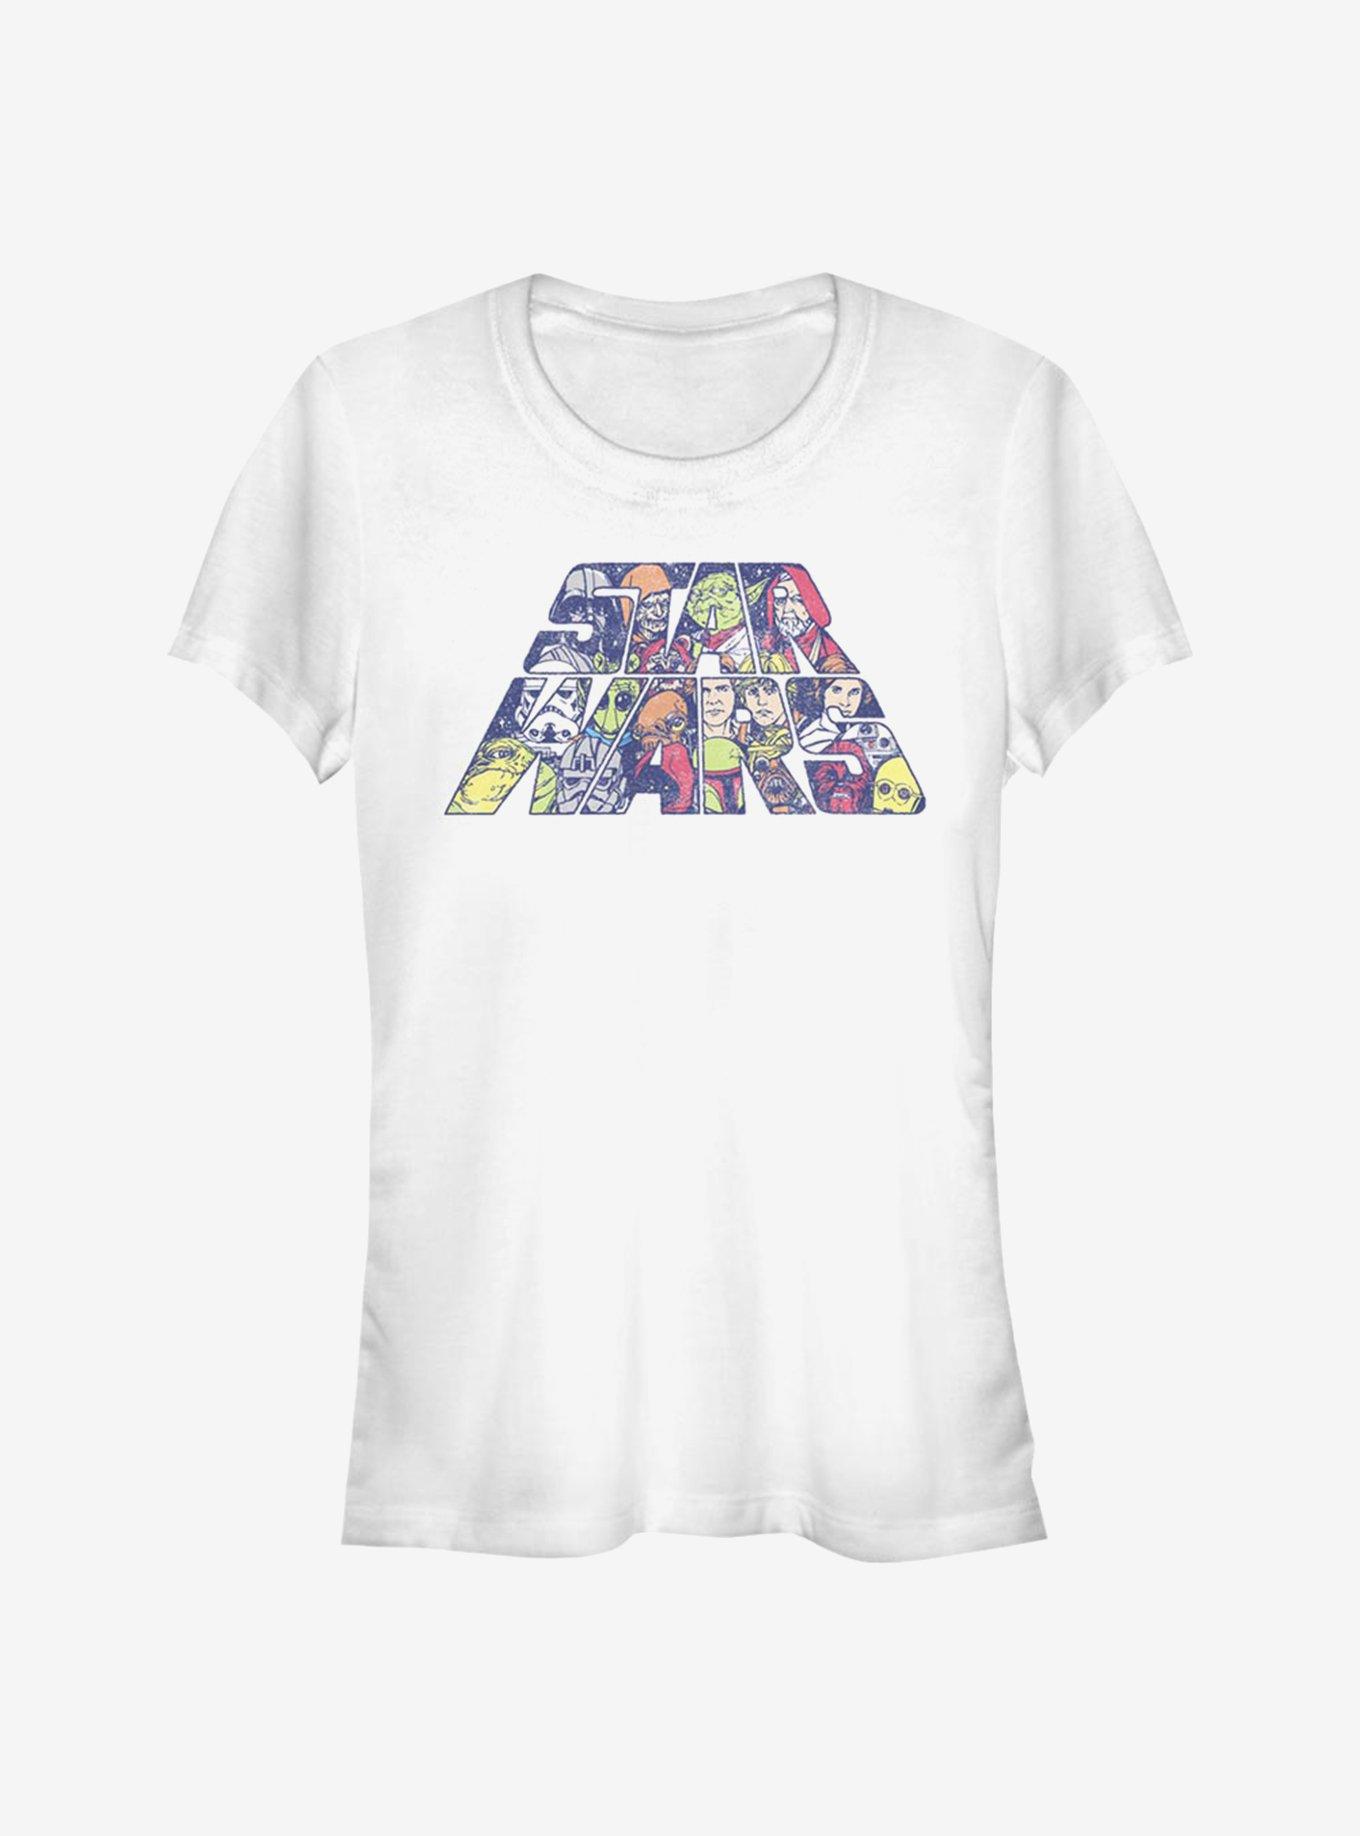 Star Wars Slant Characters Logo Girls T-Shirt